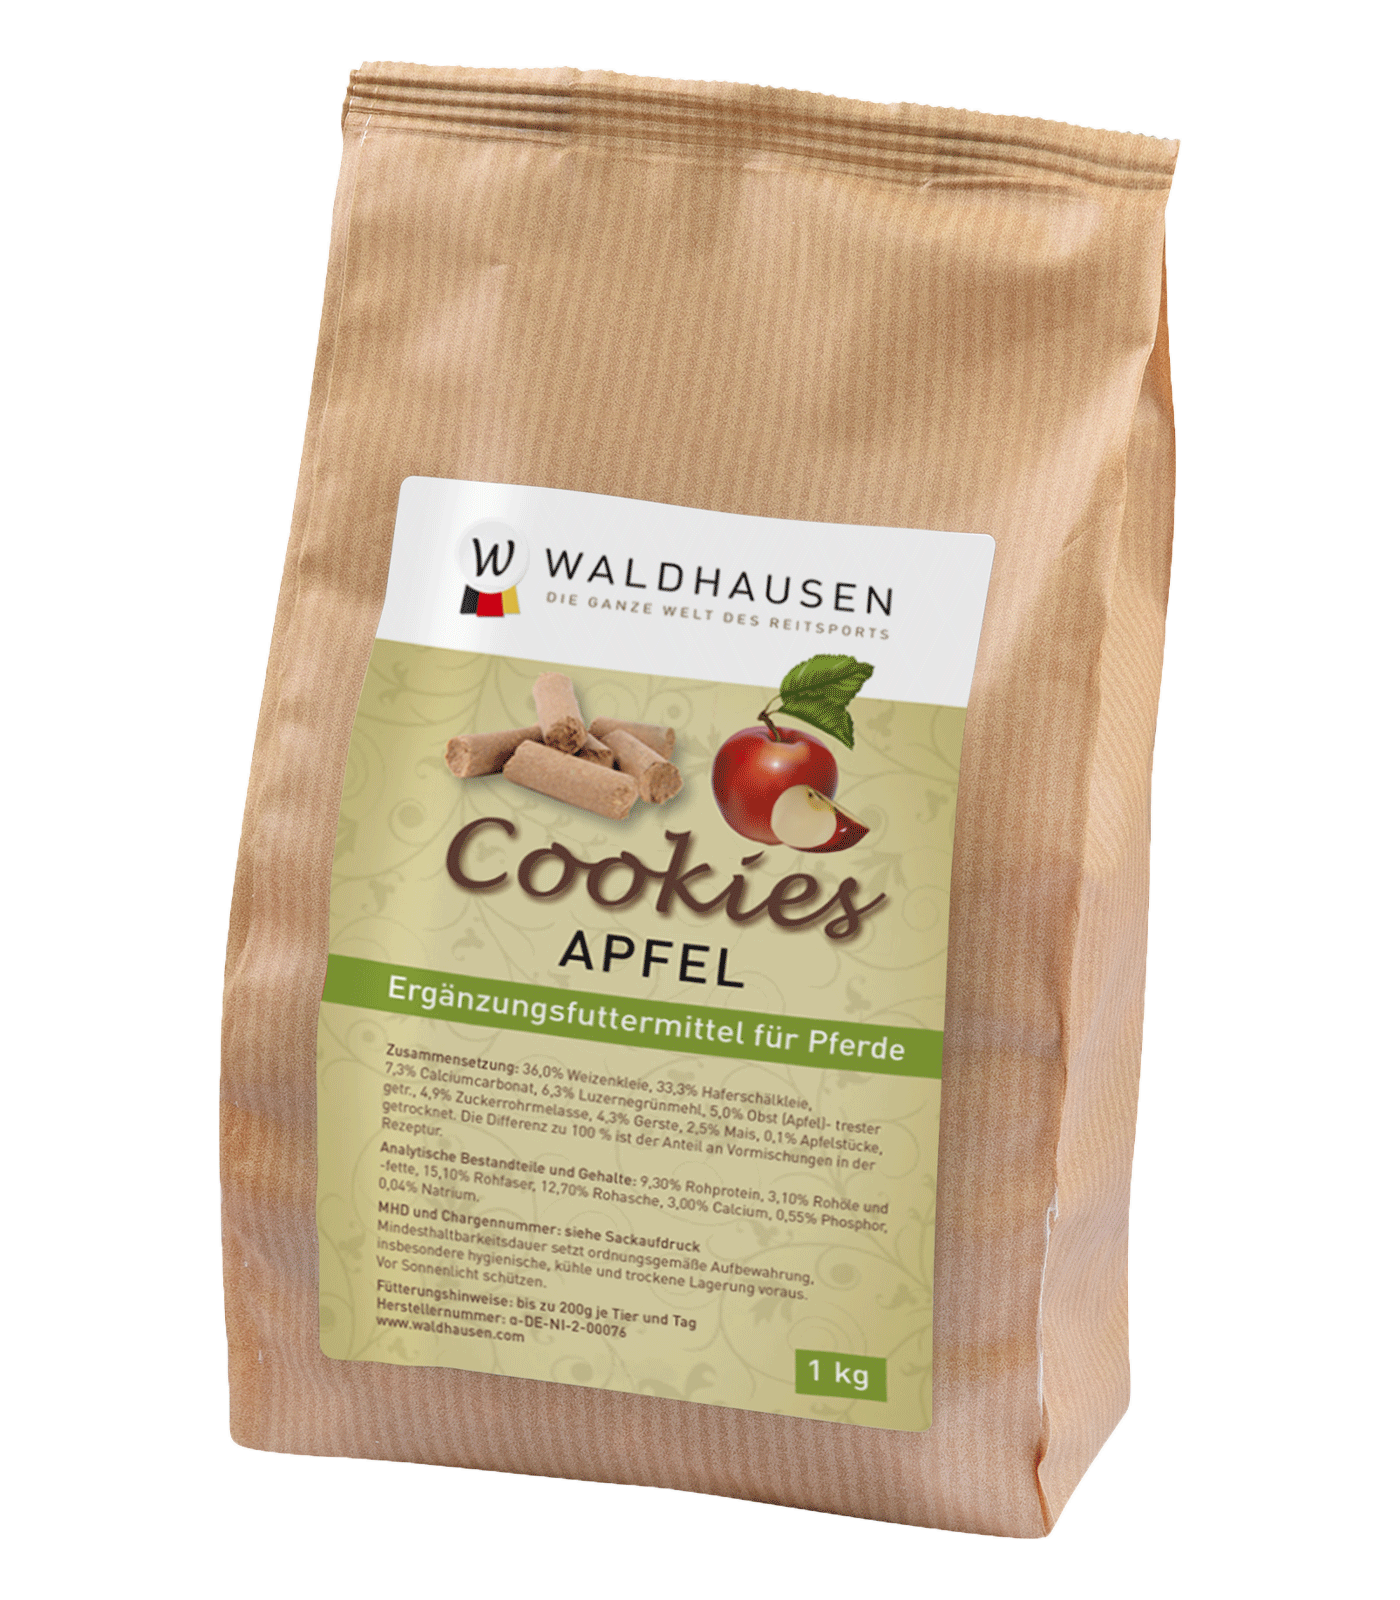 Waldhausen Apfel-Cookies